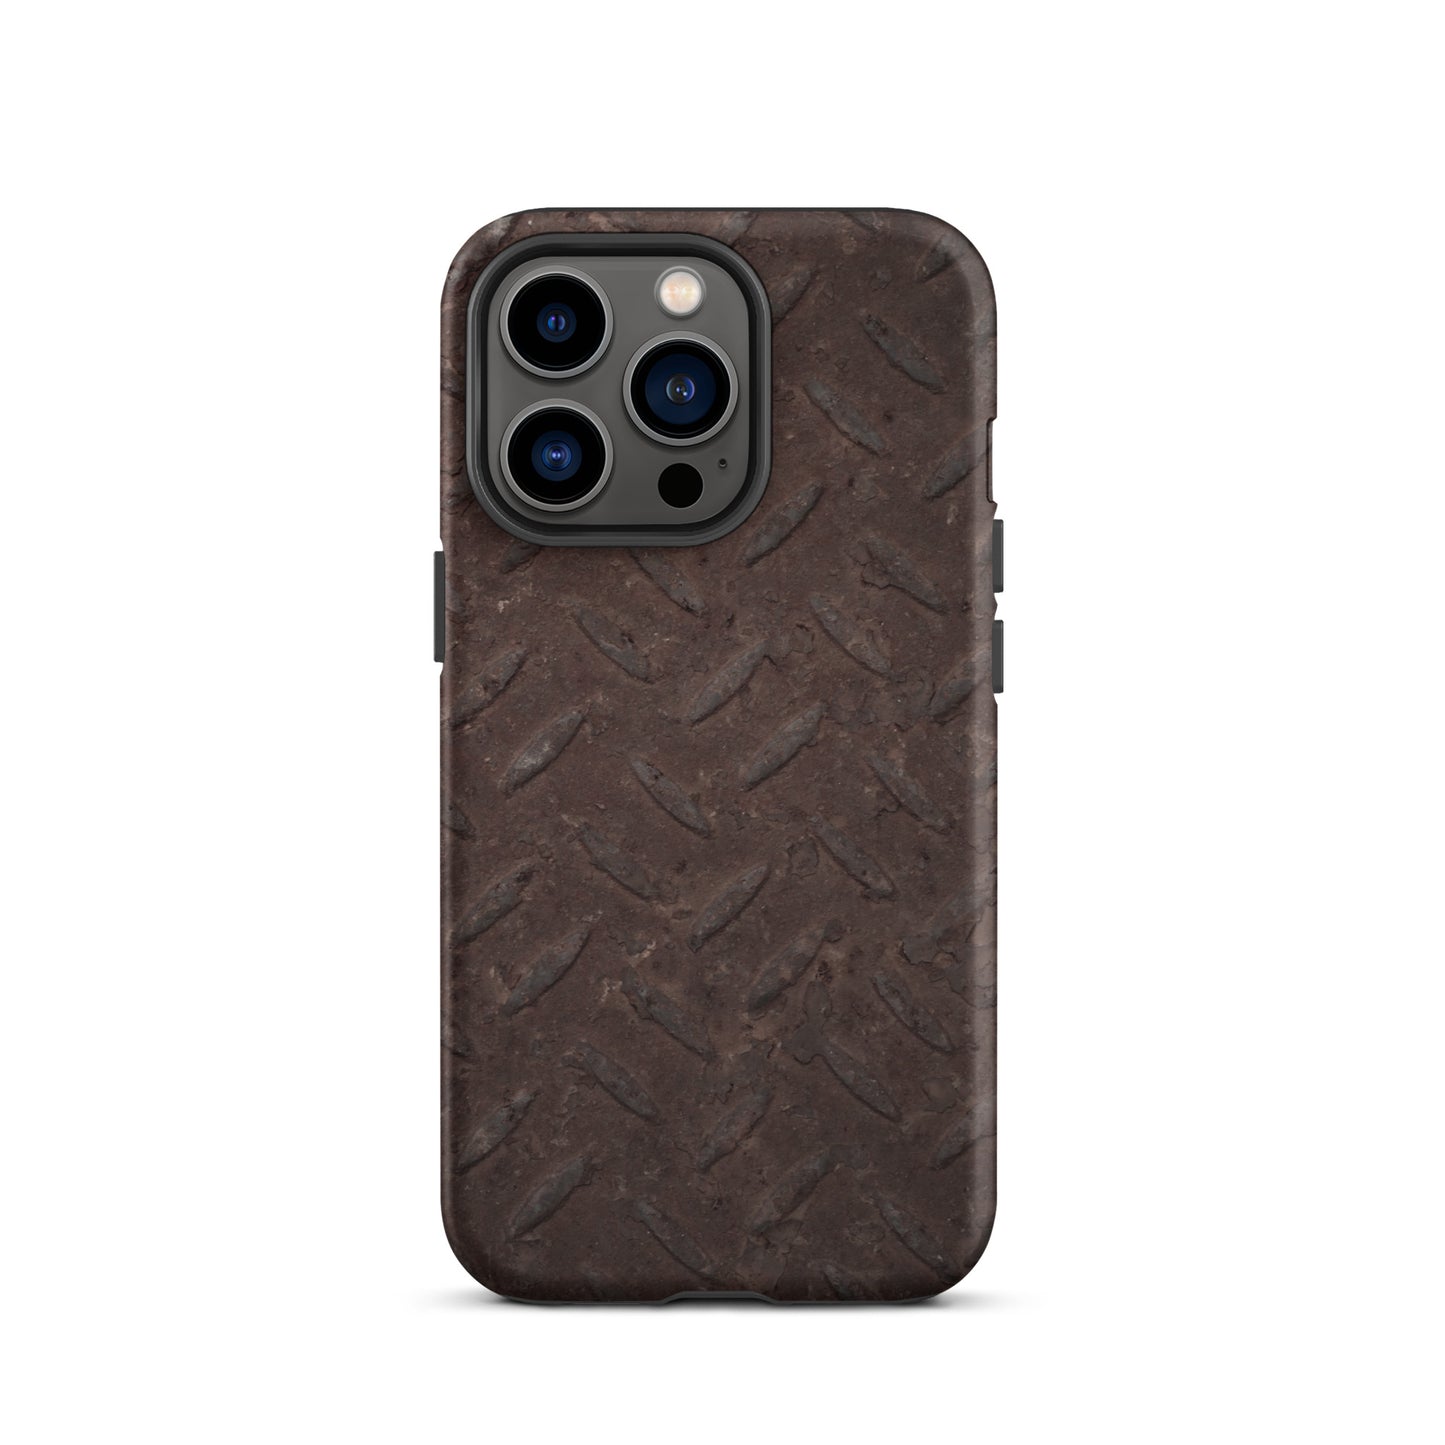 Rusty Metal Tough iPhone case